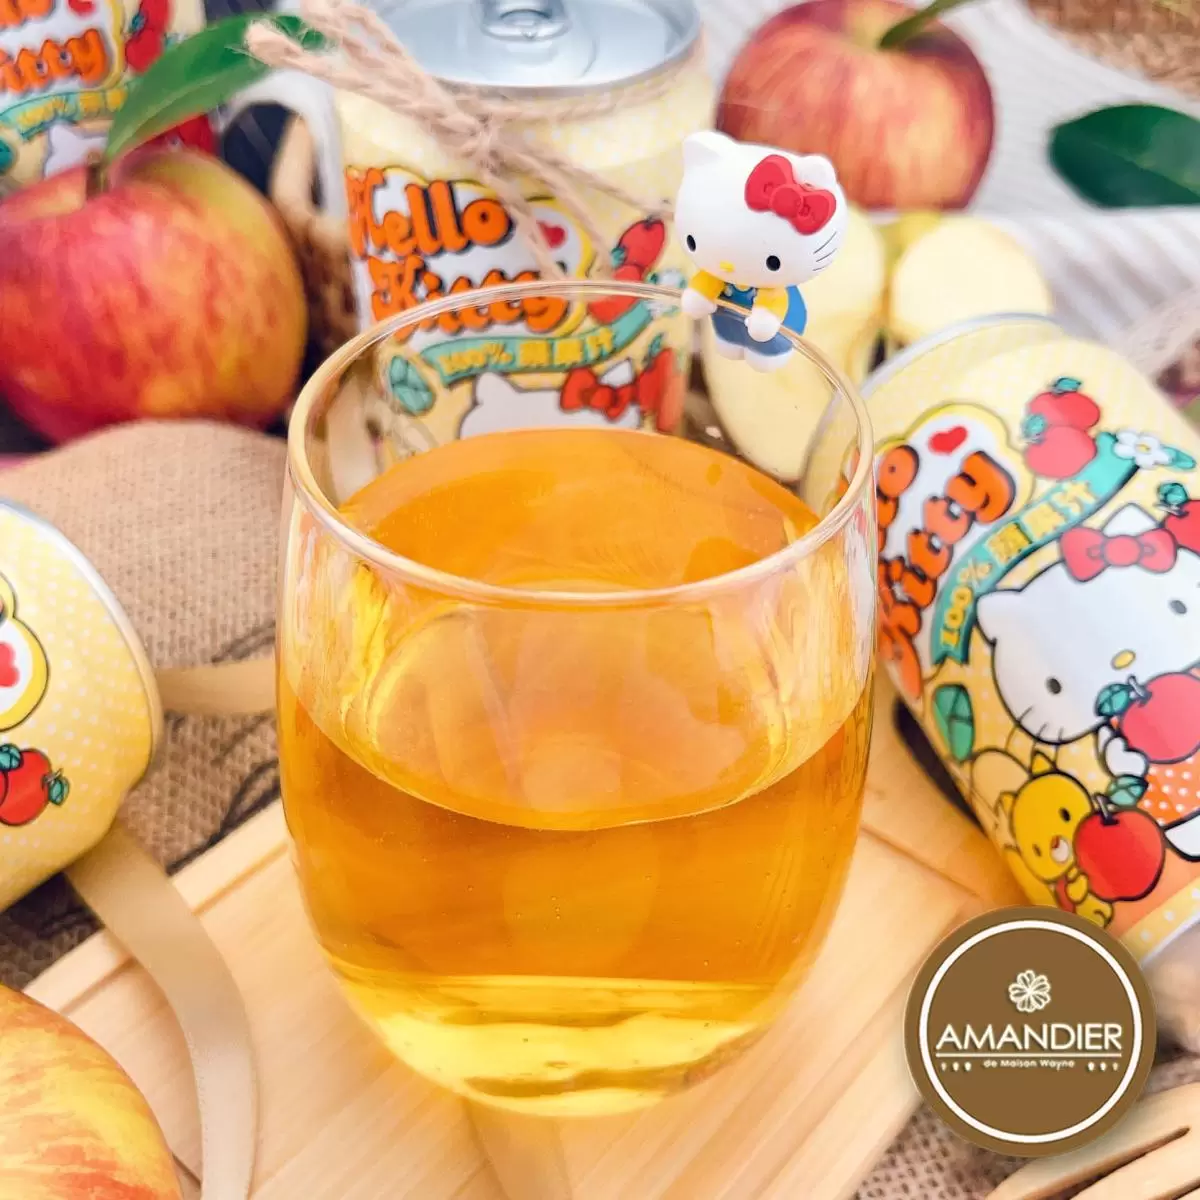 Hello Kitty 100%蘋果汁(單罐)